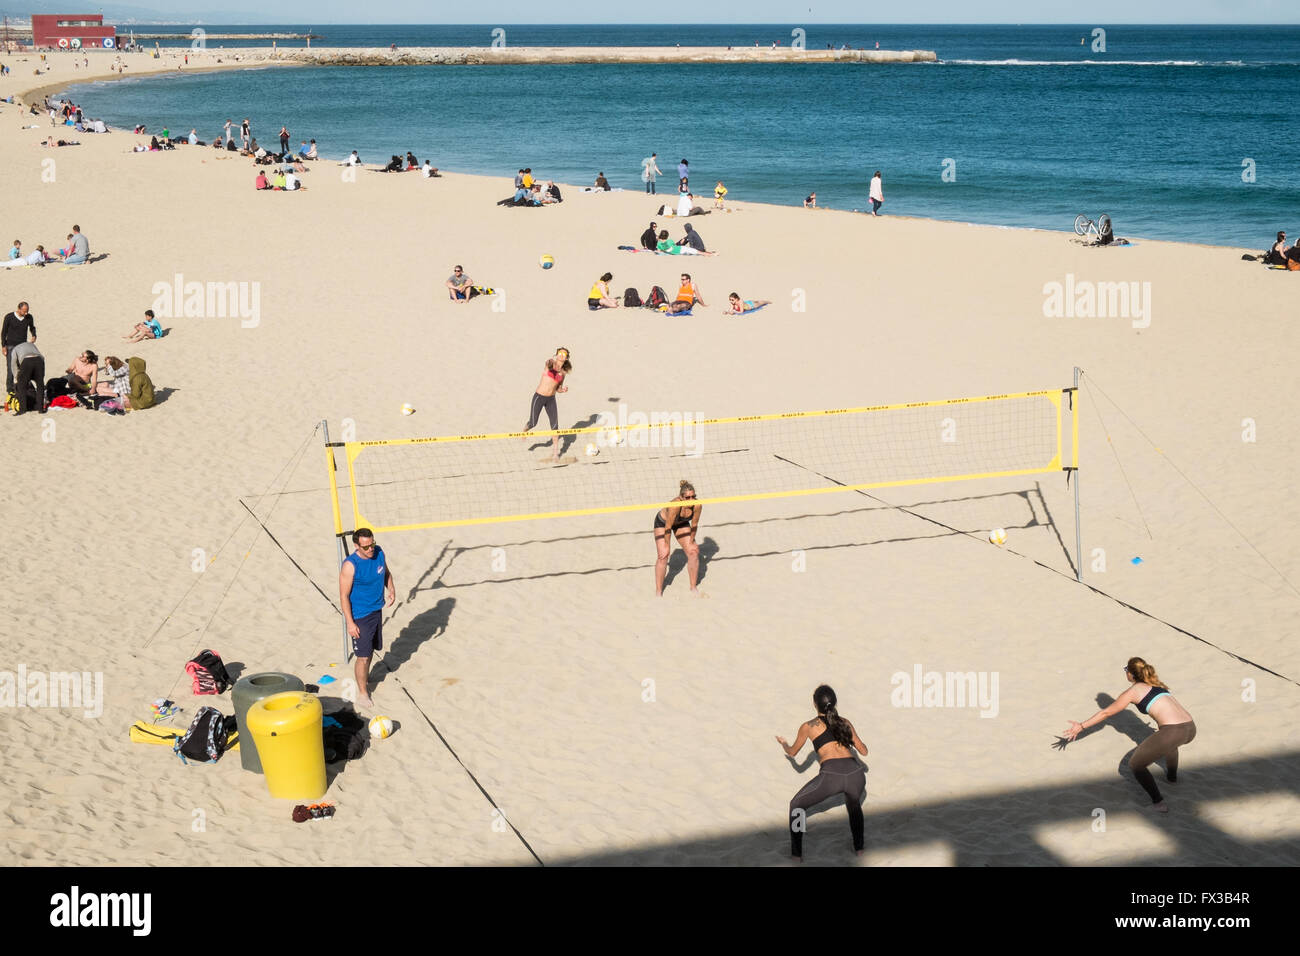 Playing Beach Volleyball on sandy sand at Playa,Plage, Nova Icaria Beach, Barcelona,Catalonia,Spain,Europe. Stock Photo